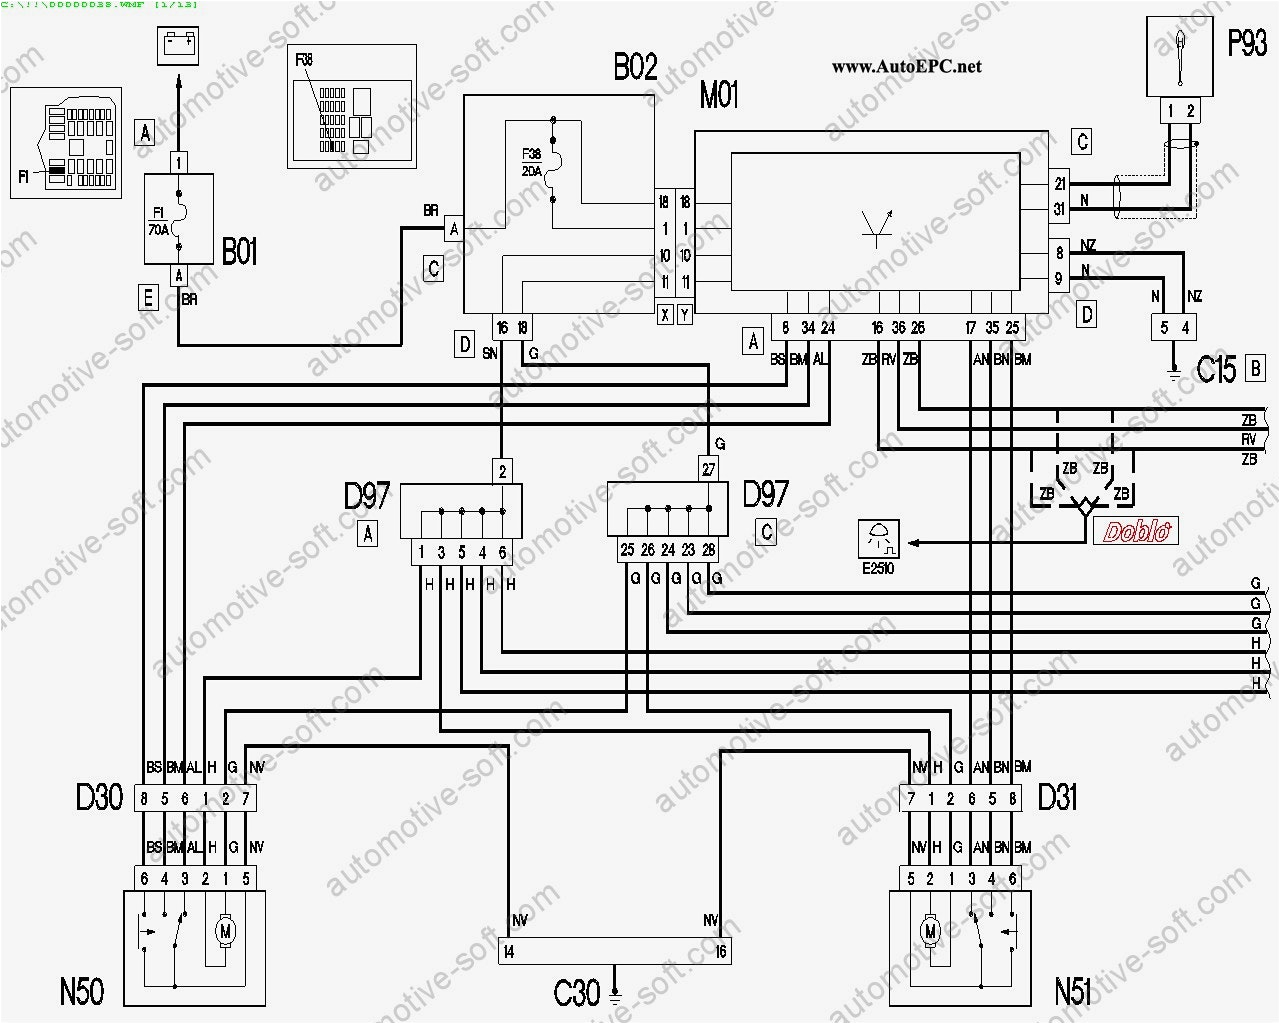 renault trafic radio wiring diagram pleasing pdf sevimliler at prepossessing